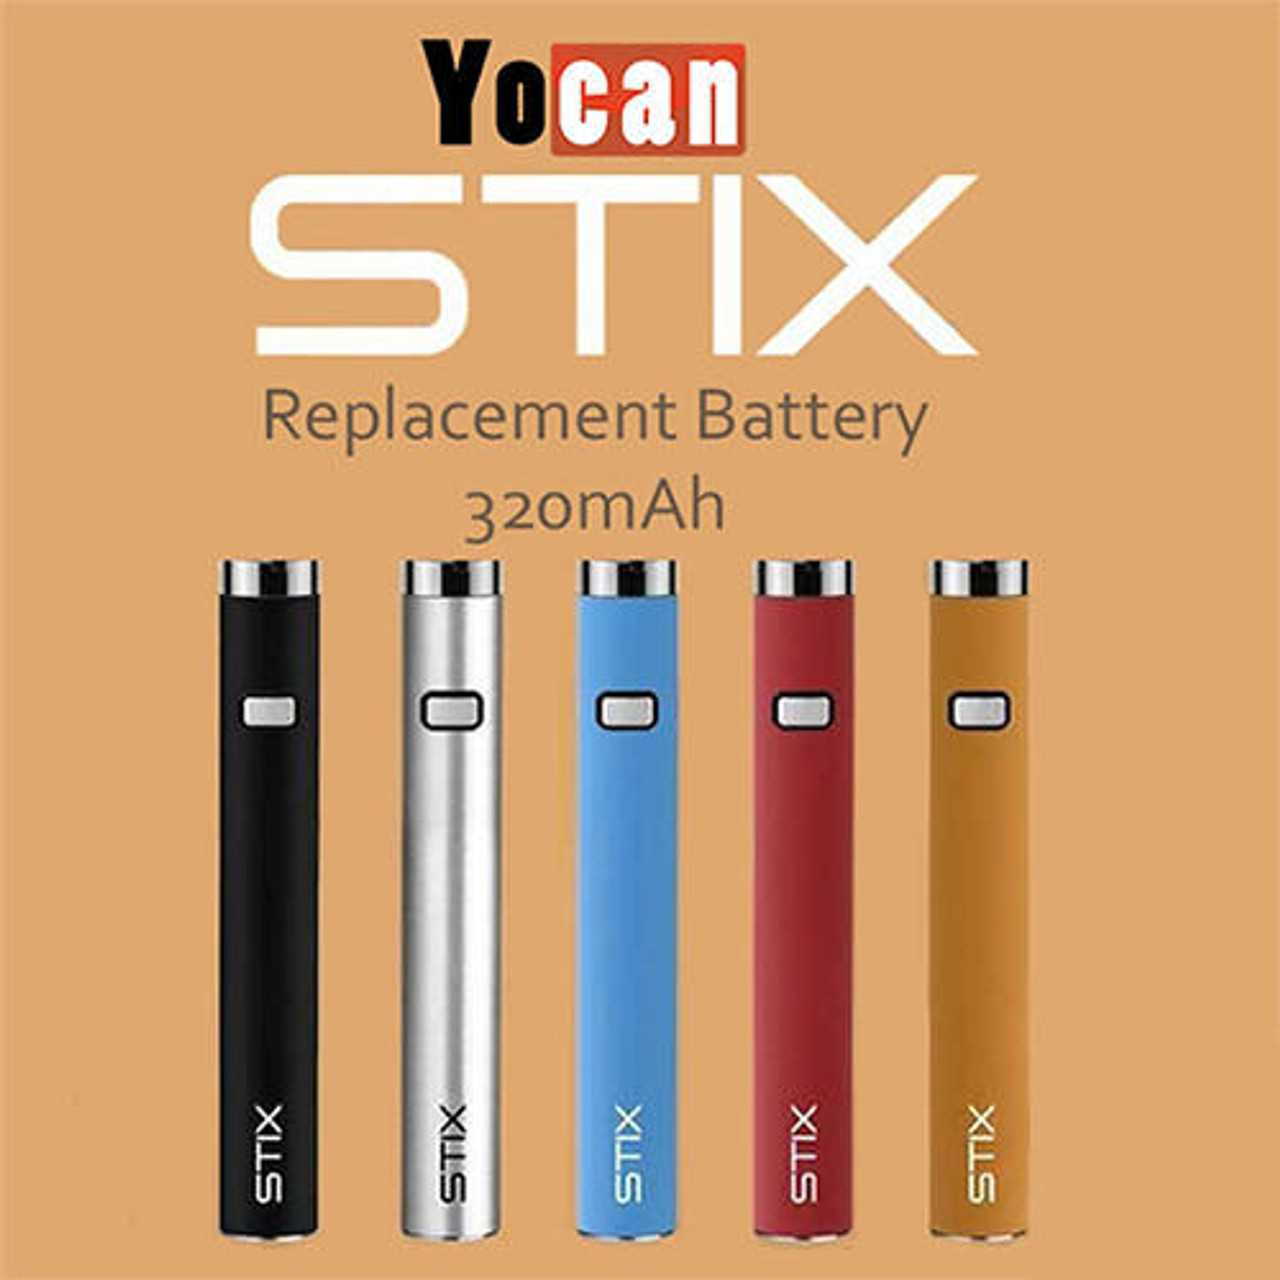 Yocan Stix Plus Vaporizer for Sale